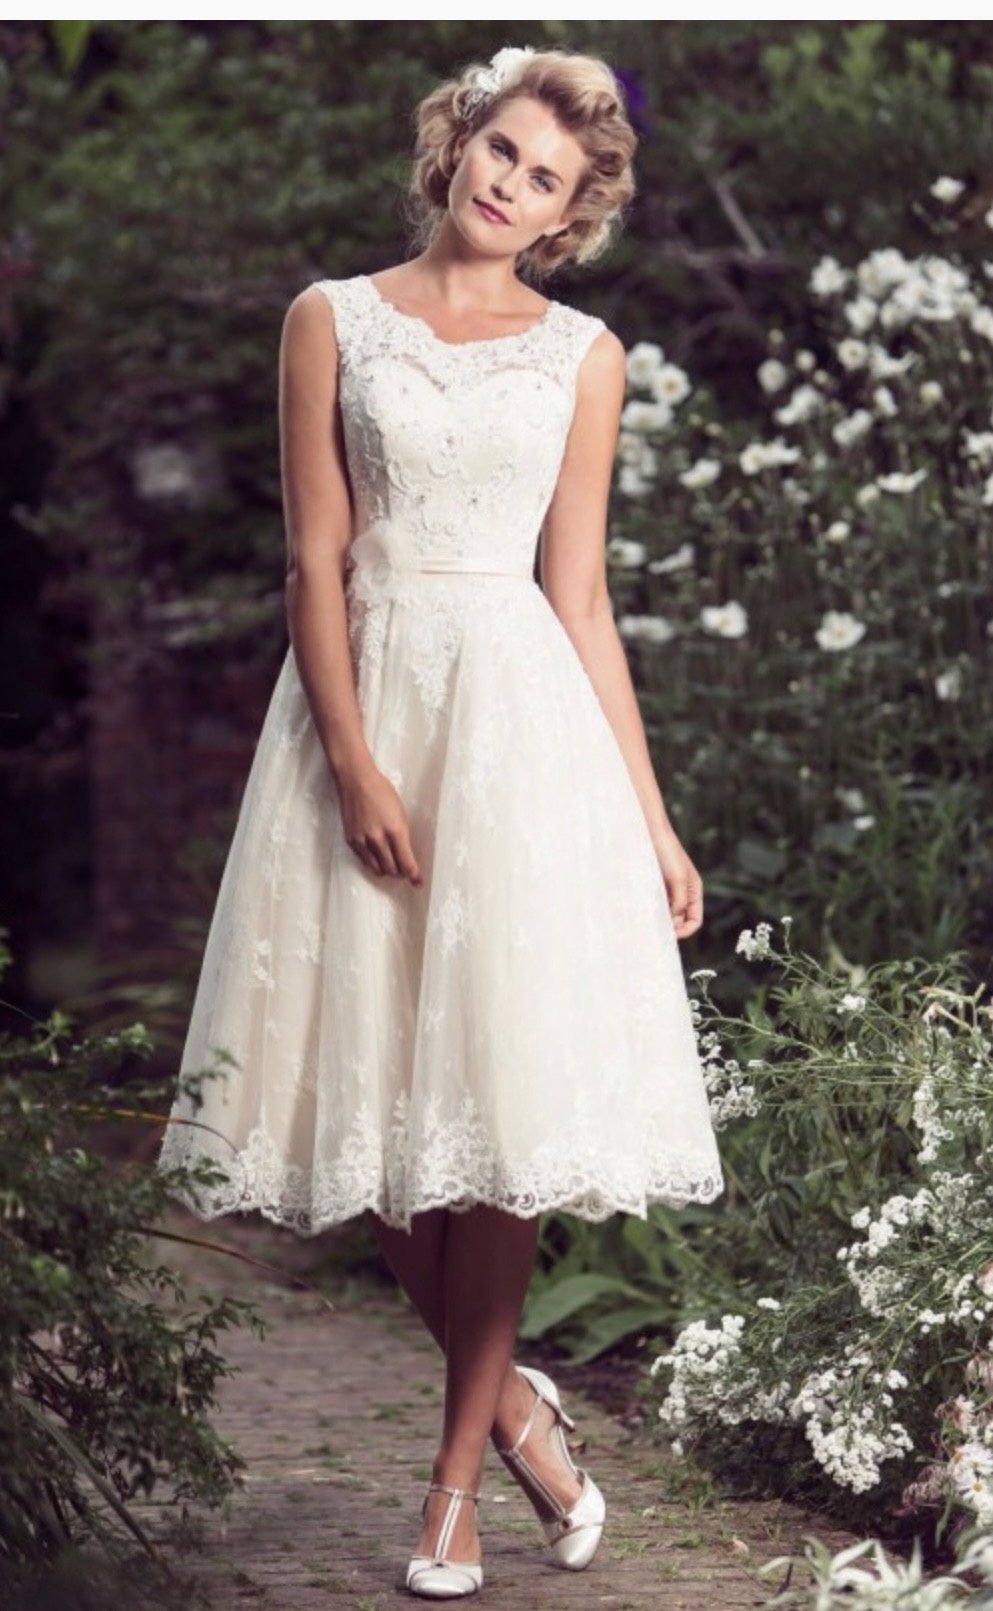 Brighton Belle Mia Sample Wedding Dress Save 81% - Stillwhite